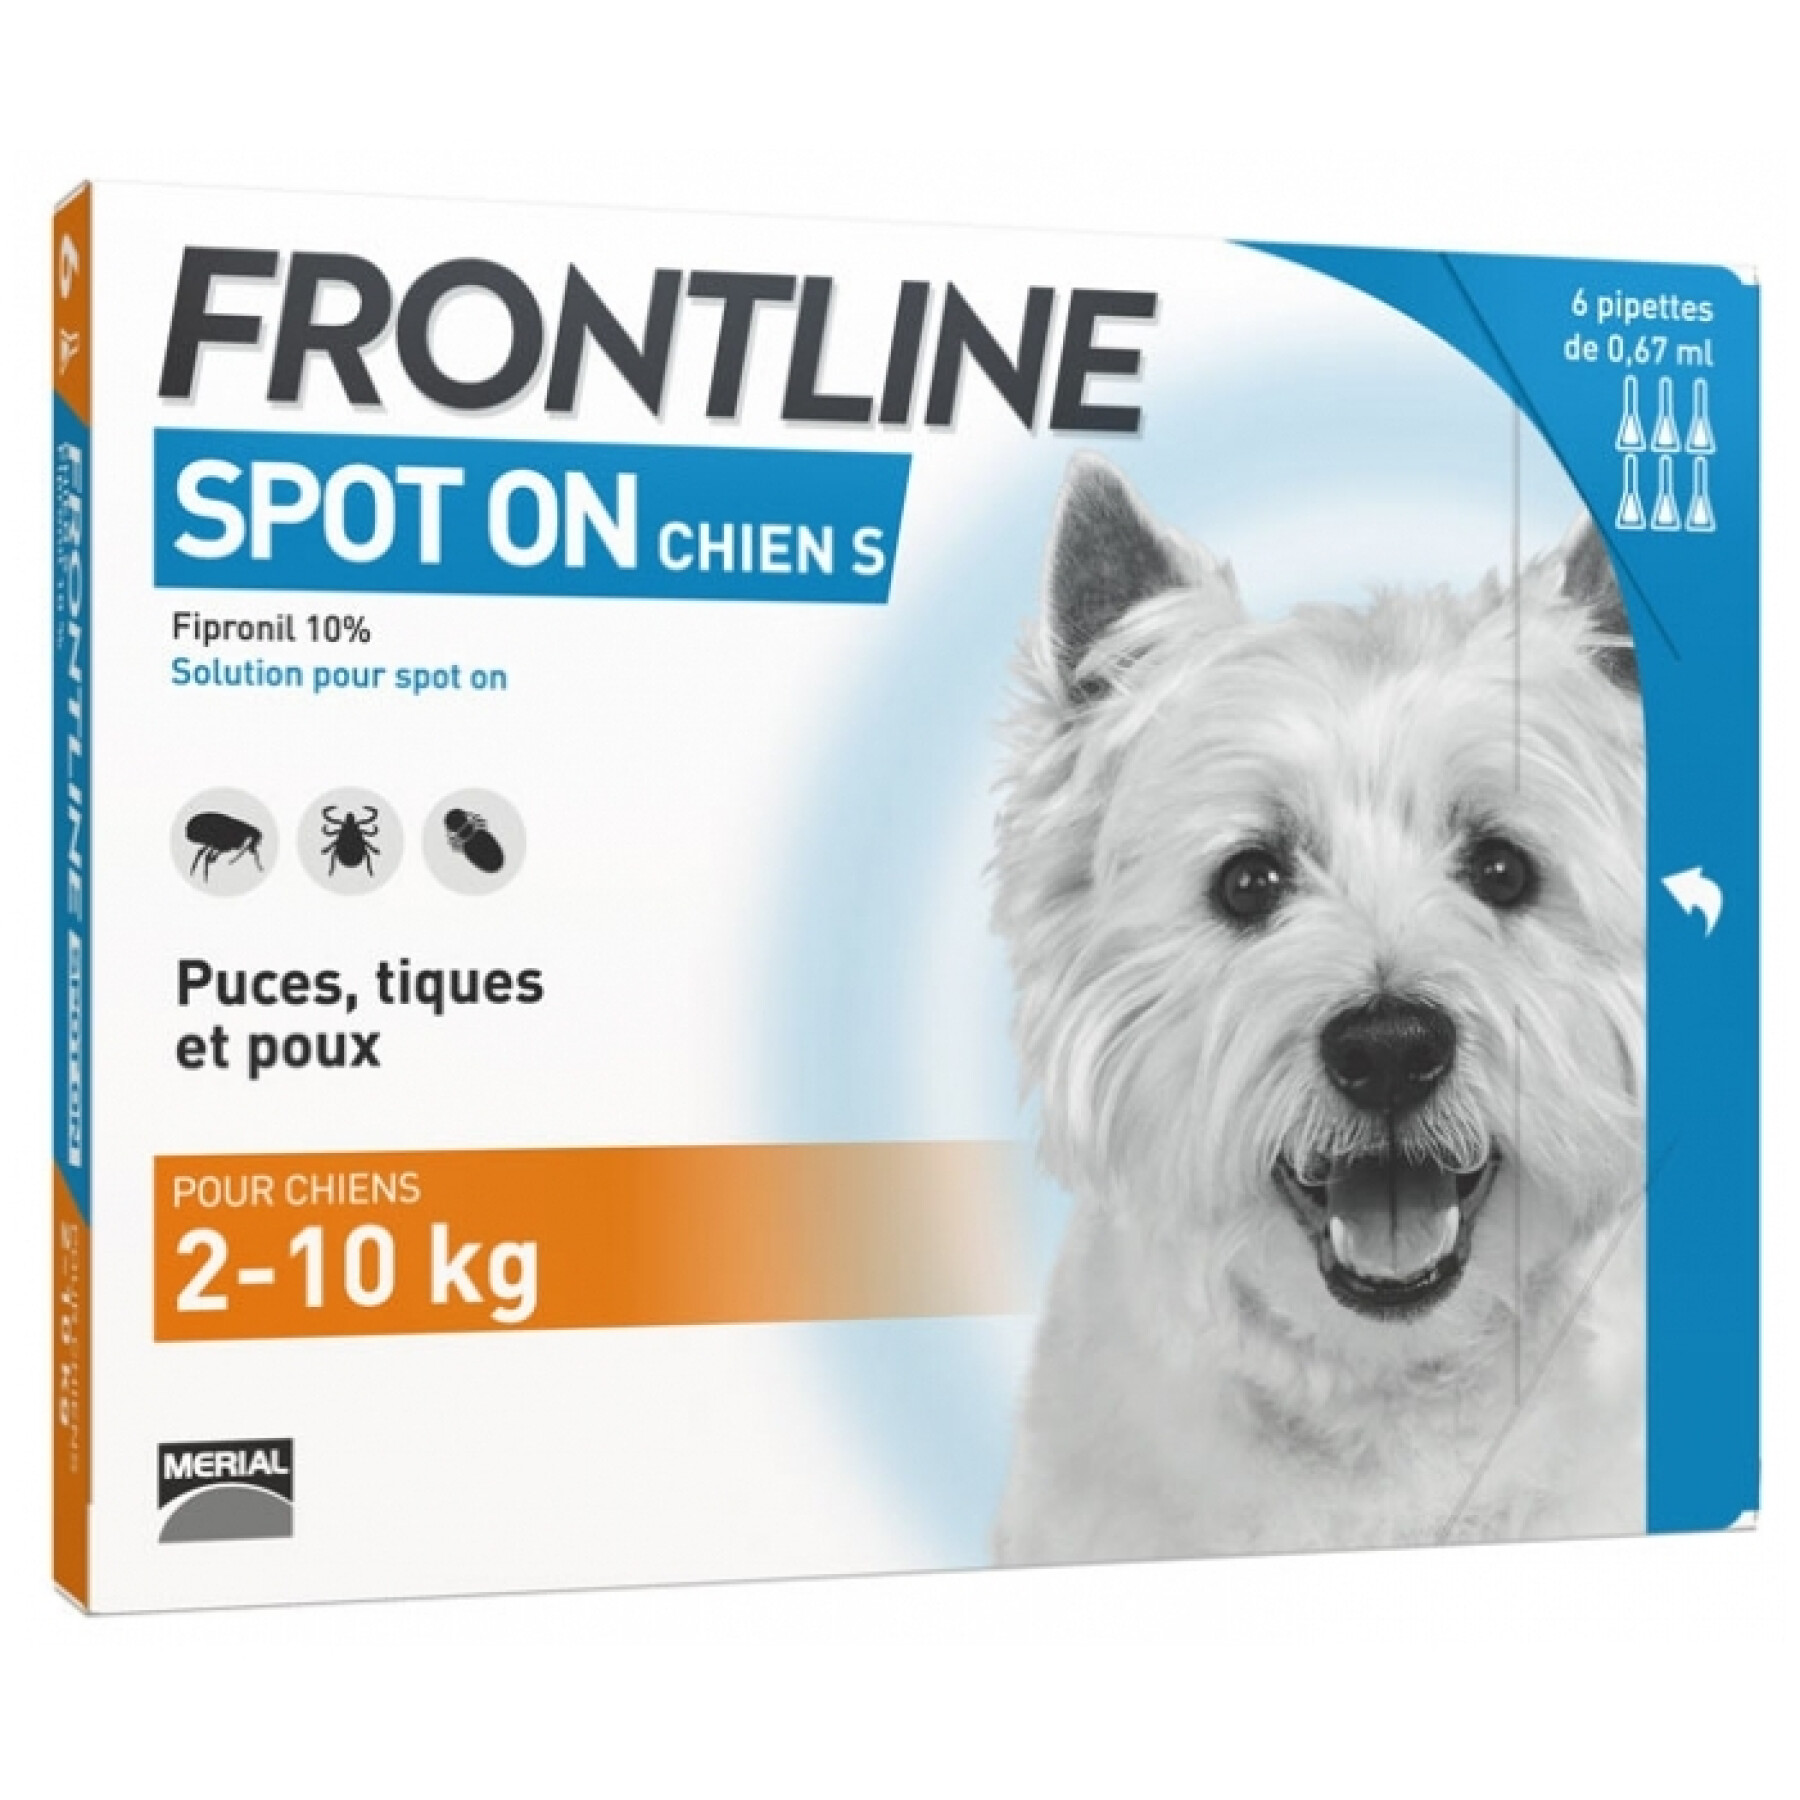 Pest control for dogs Frontline de 2/10 kg Spot On (x6)